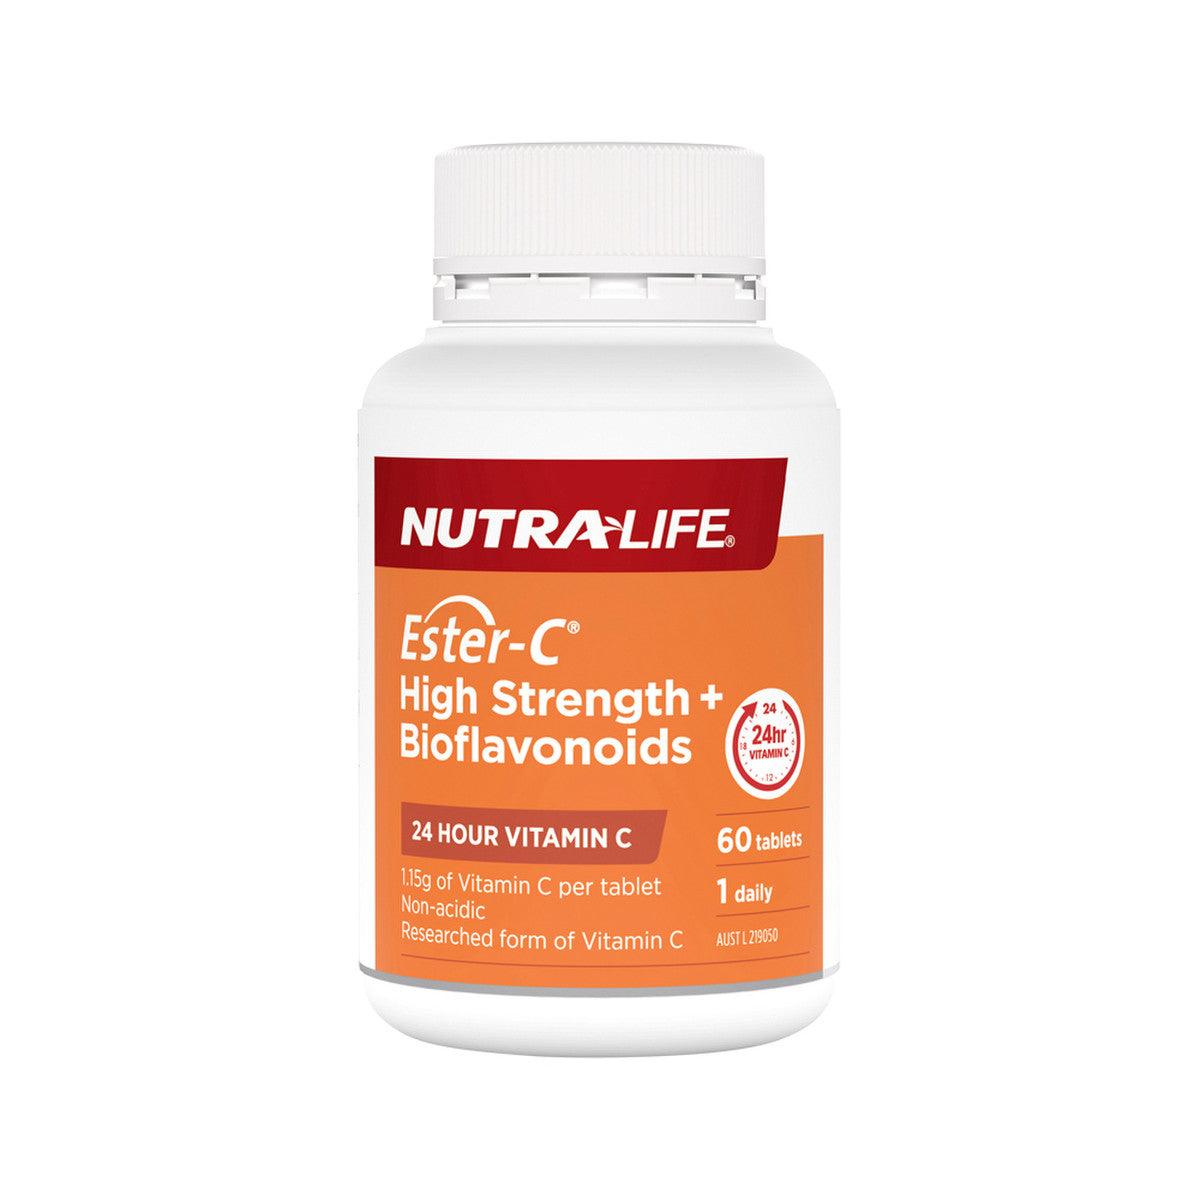 NutraLife Ester-C High Strength + Bioflavonoids 1500mg 60 Tablets - QVM Vitamins™